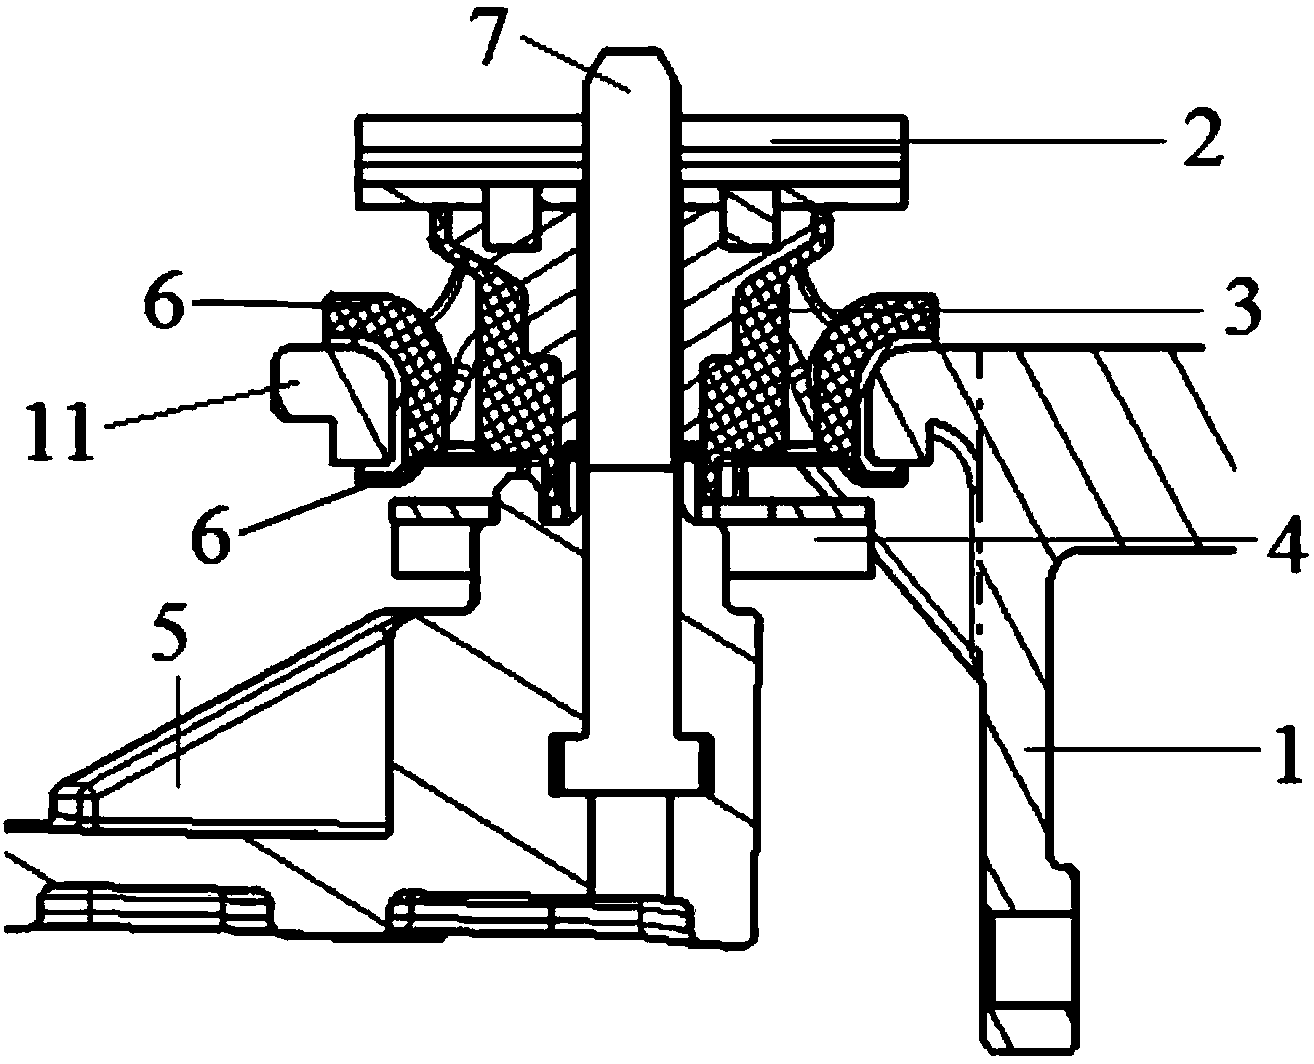 Vehicle engine suspension structure